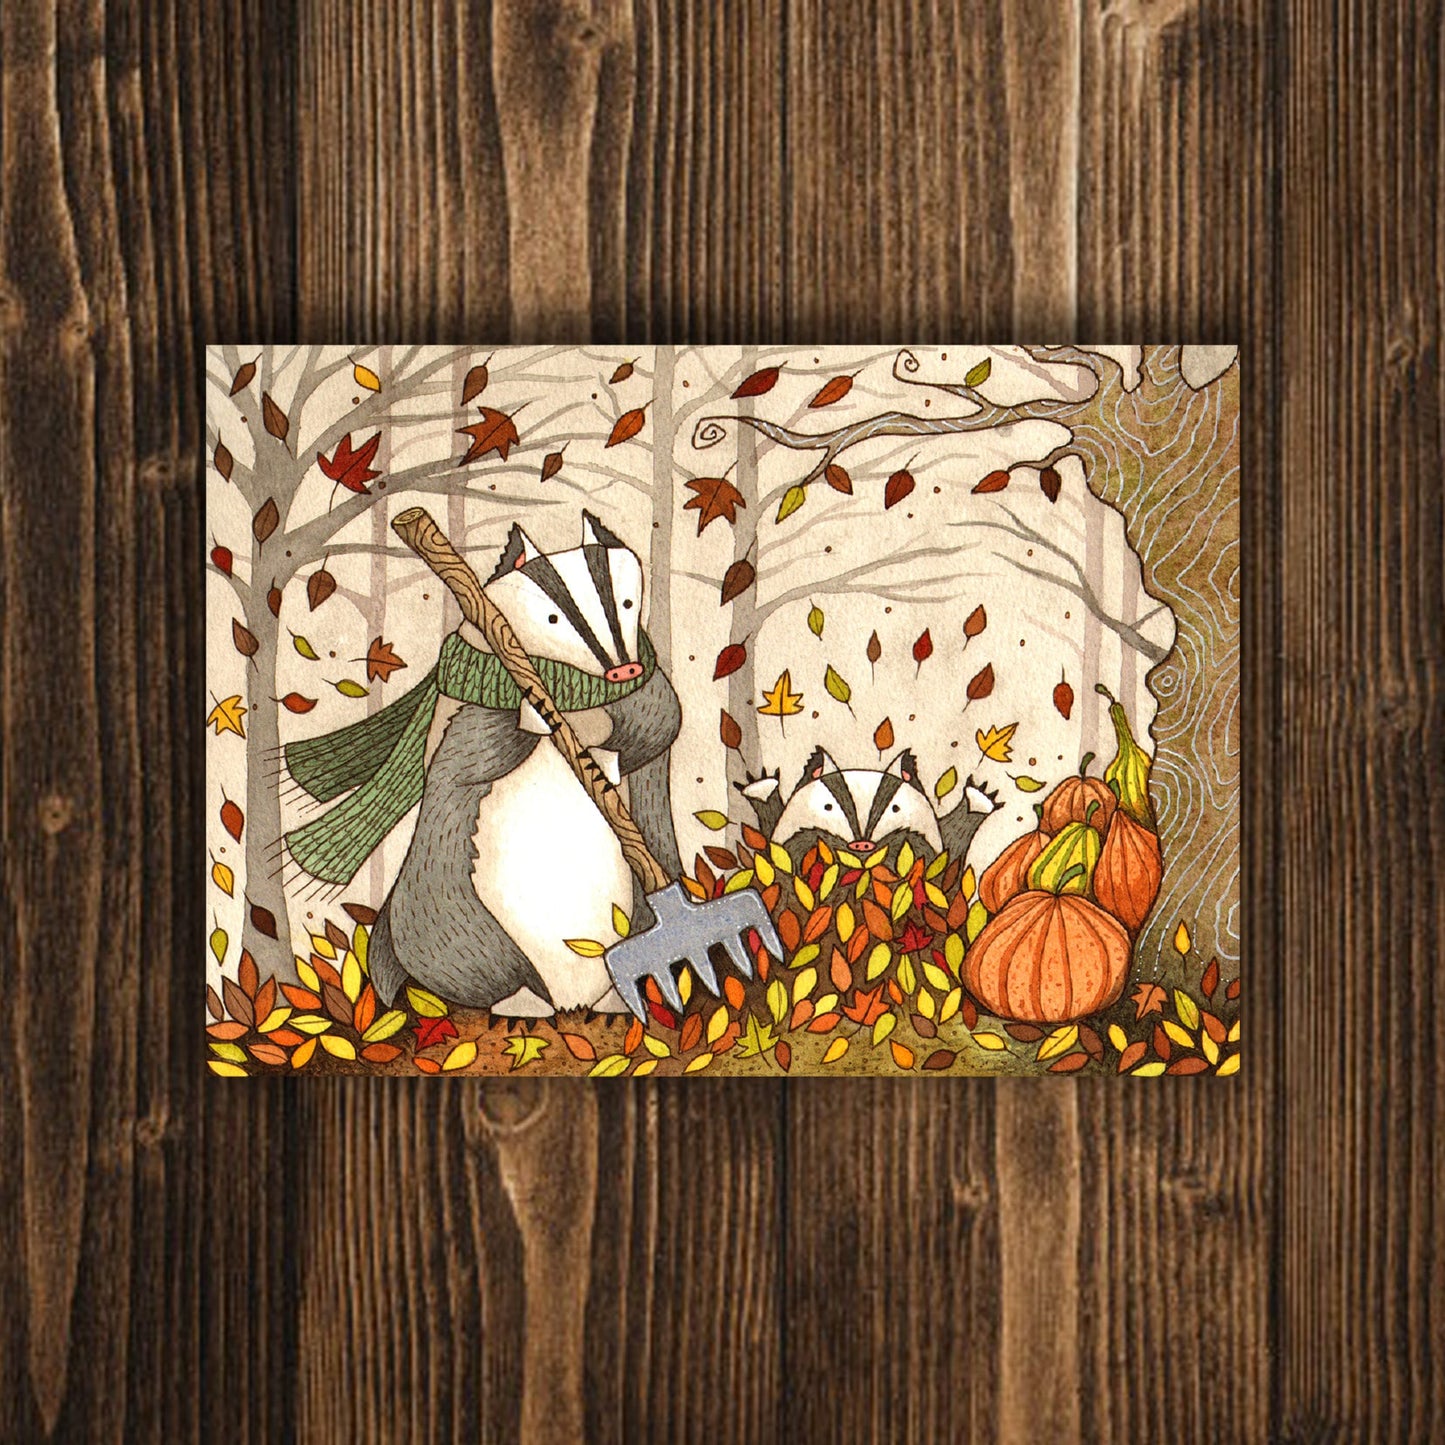 Mini A6 Autumn Badgers Print - Small Autumn Pumpkin Badger Illustration - Mini Halloween Postcard Print - Cute Badger Woodland Animals Art